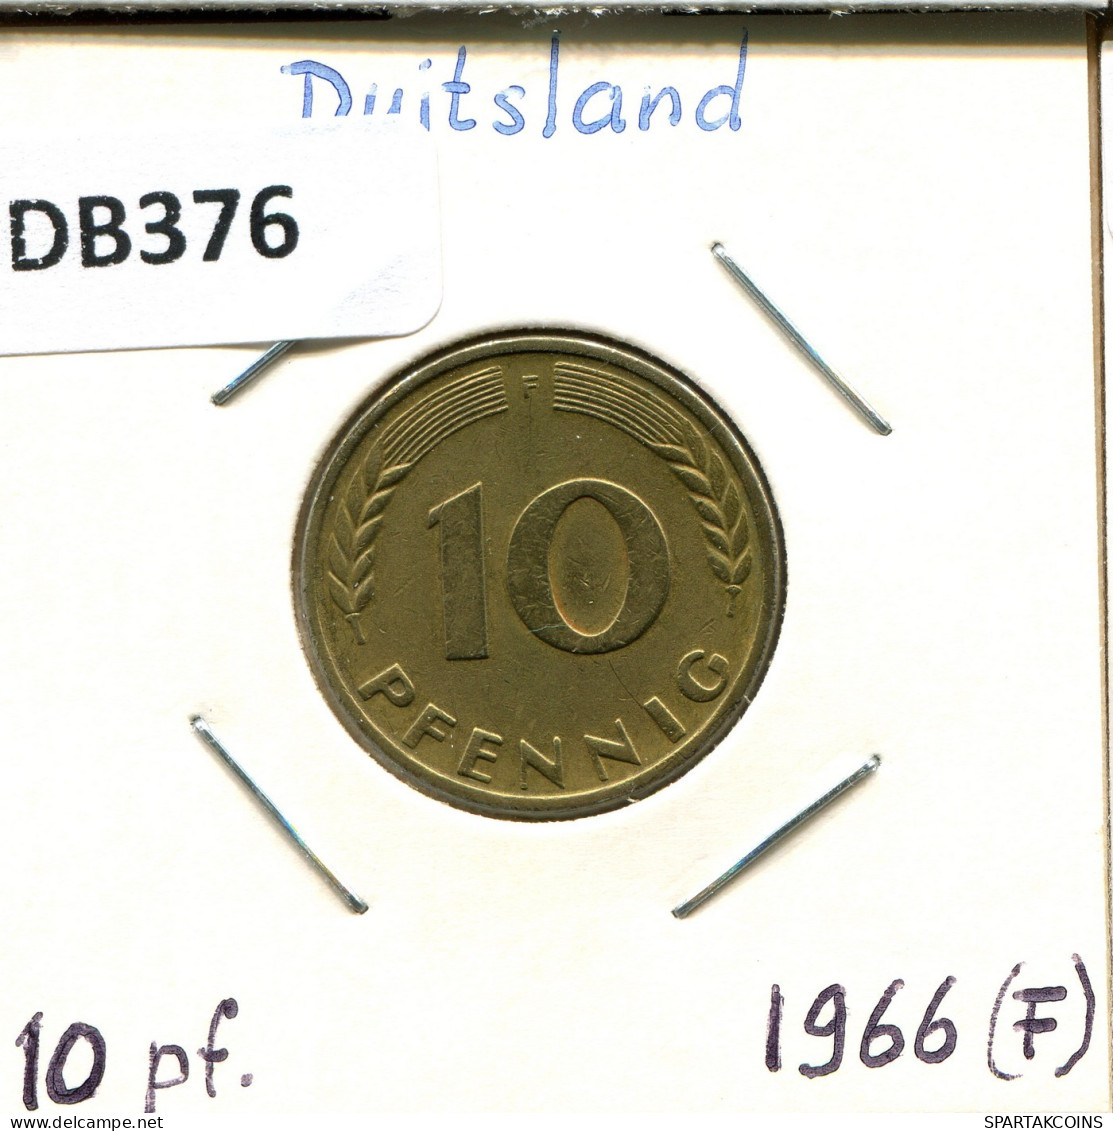 10 PFENNIG 1966 F BRD DEUTSCHLAND Münze GERMANY #DB376.D.A - 10 Pfennig